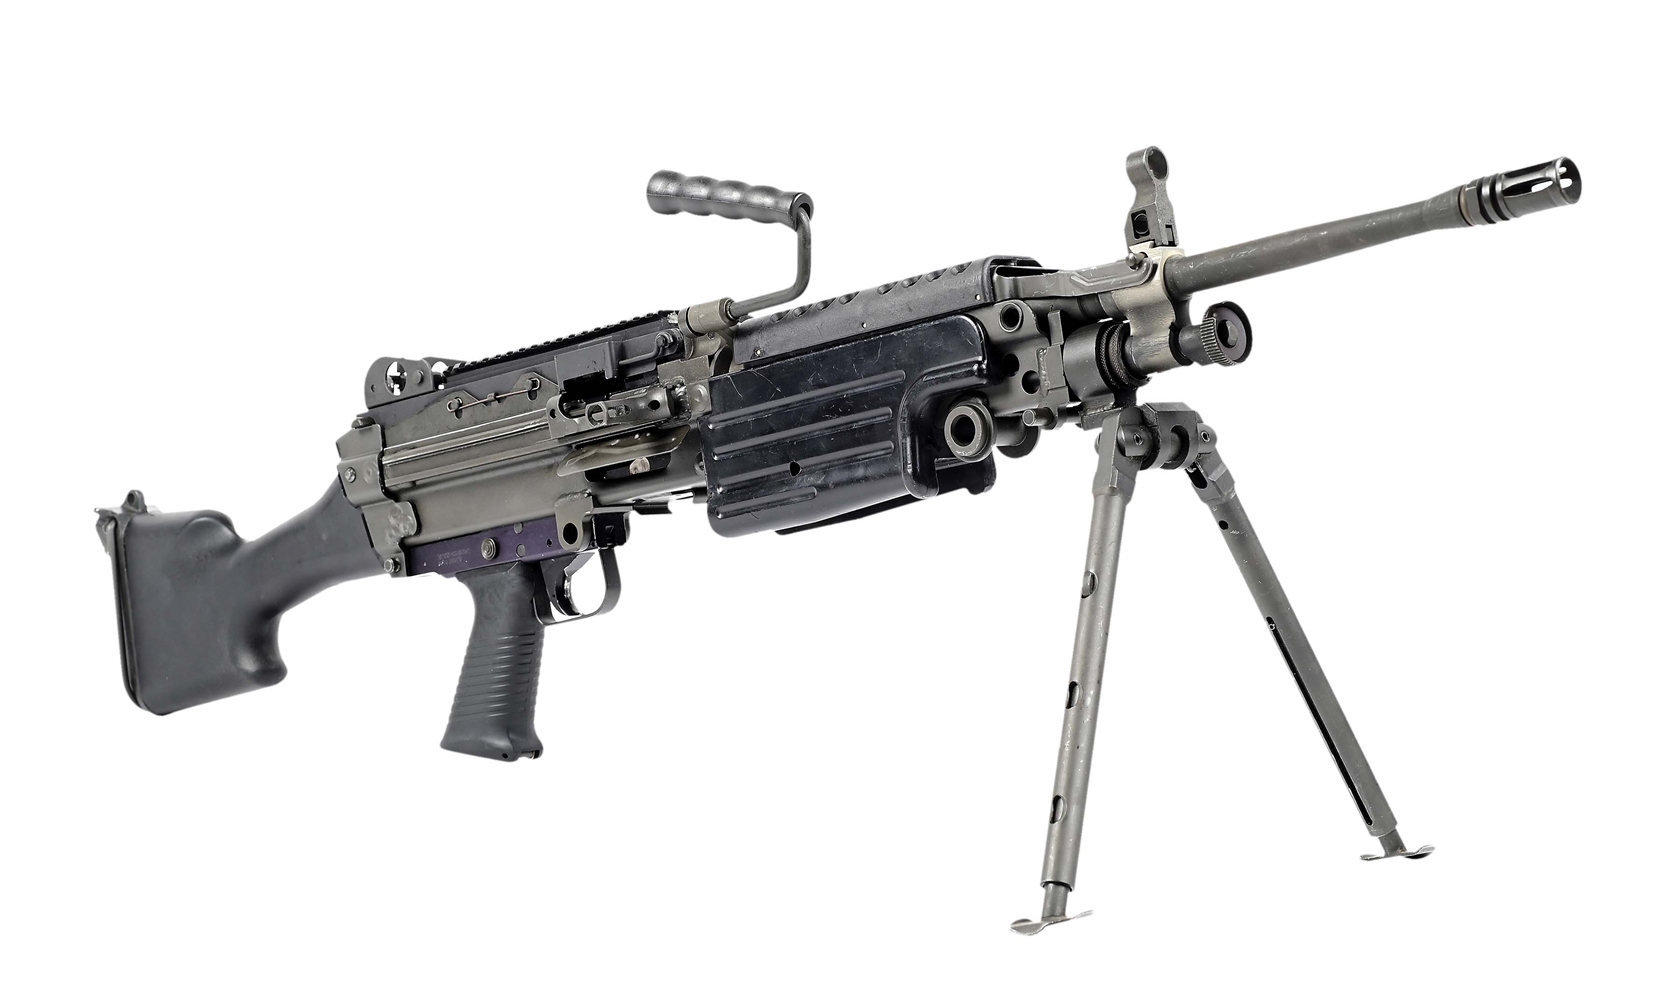 (N) EXTRAORDINARY FABRIQUE NATIONALE M249 MINIMI LIGHT MACHINE GUN (FULLY TRANSFERABLE).